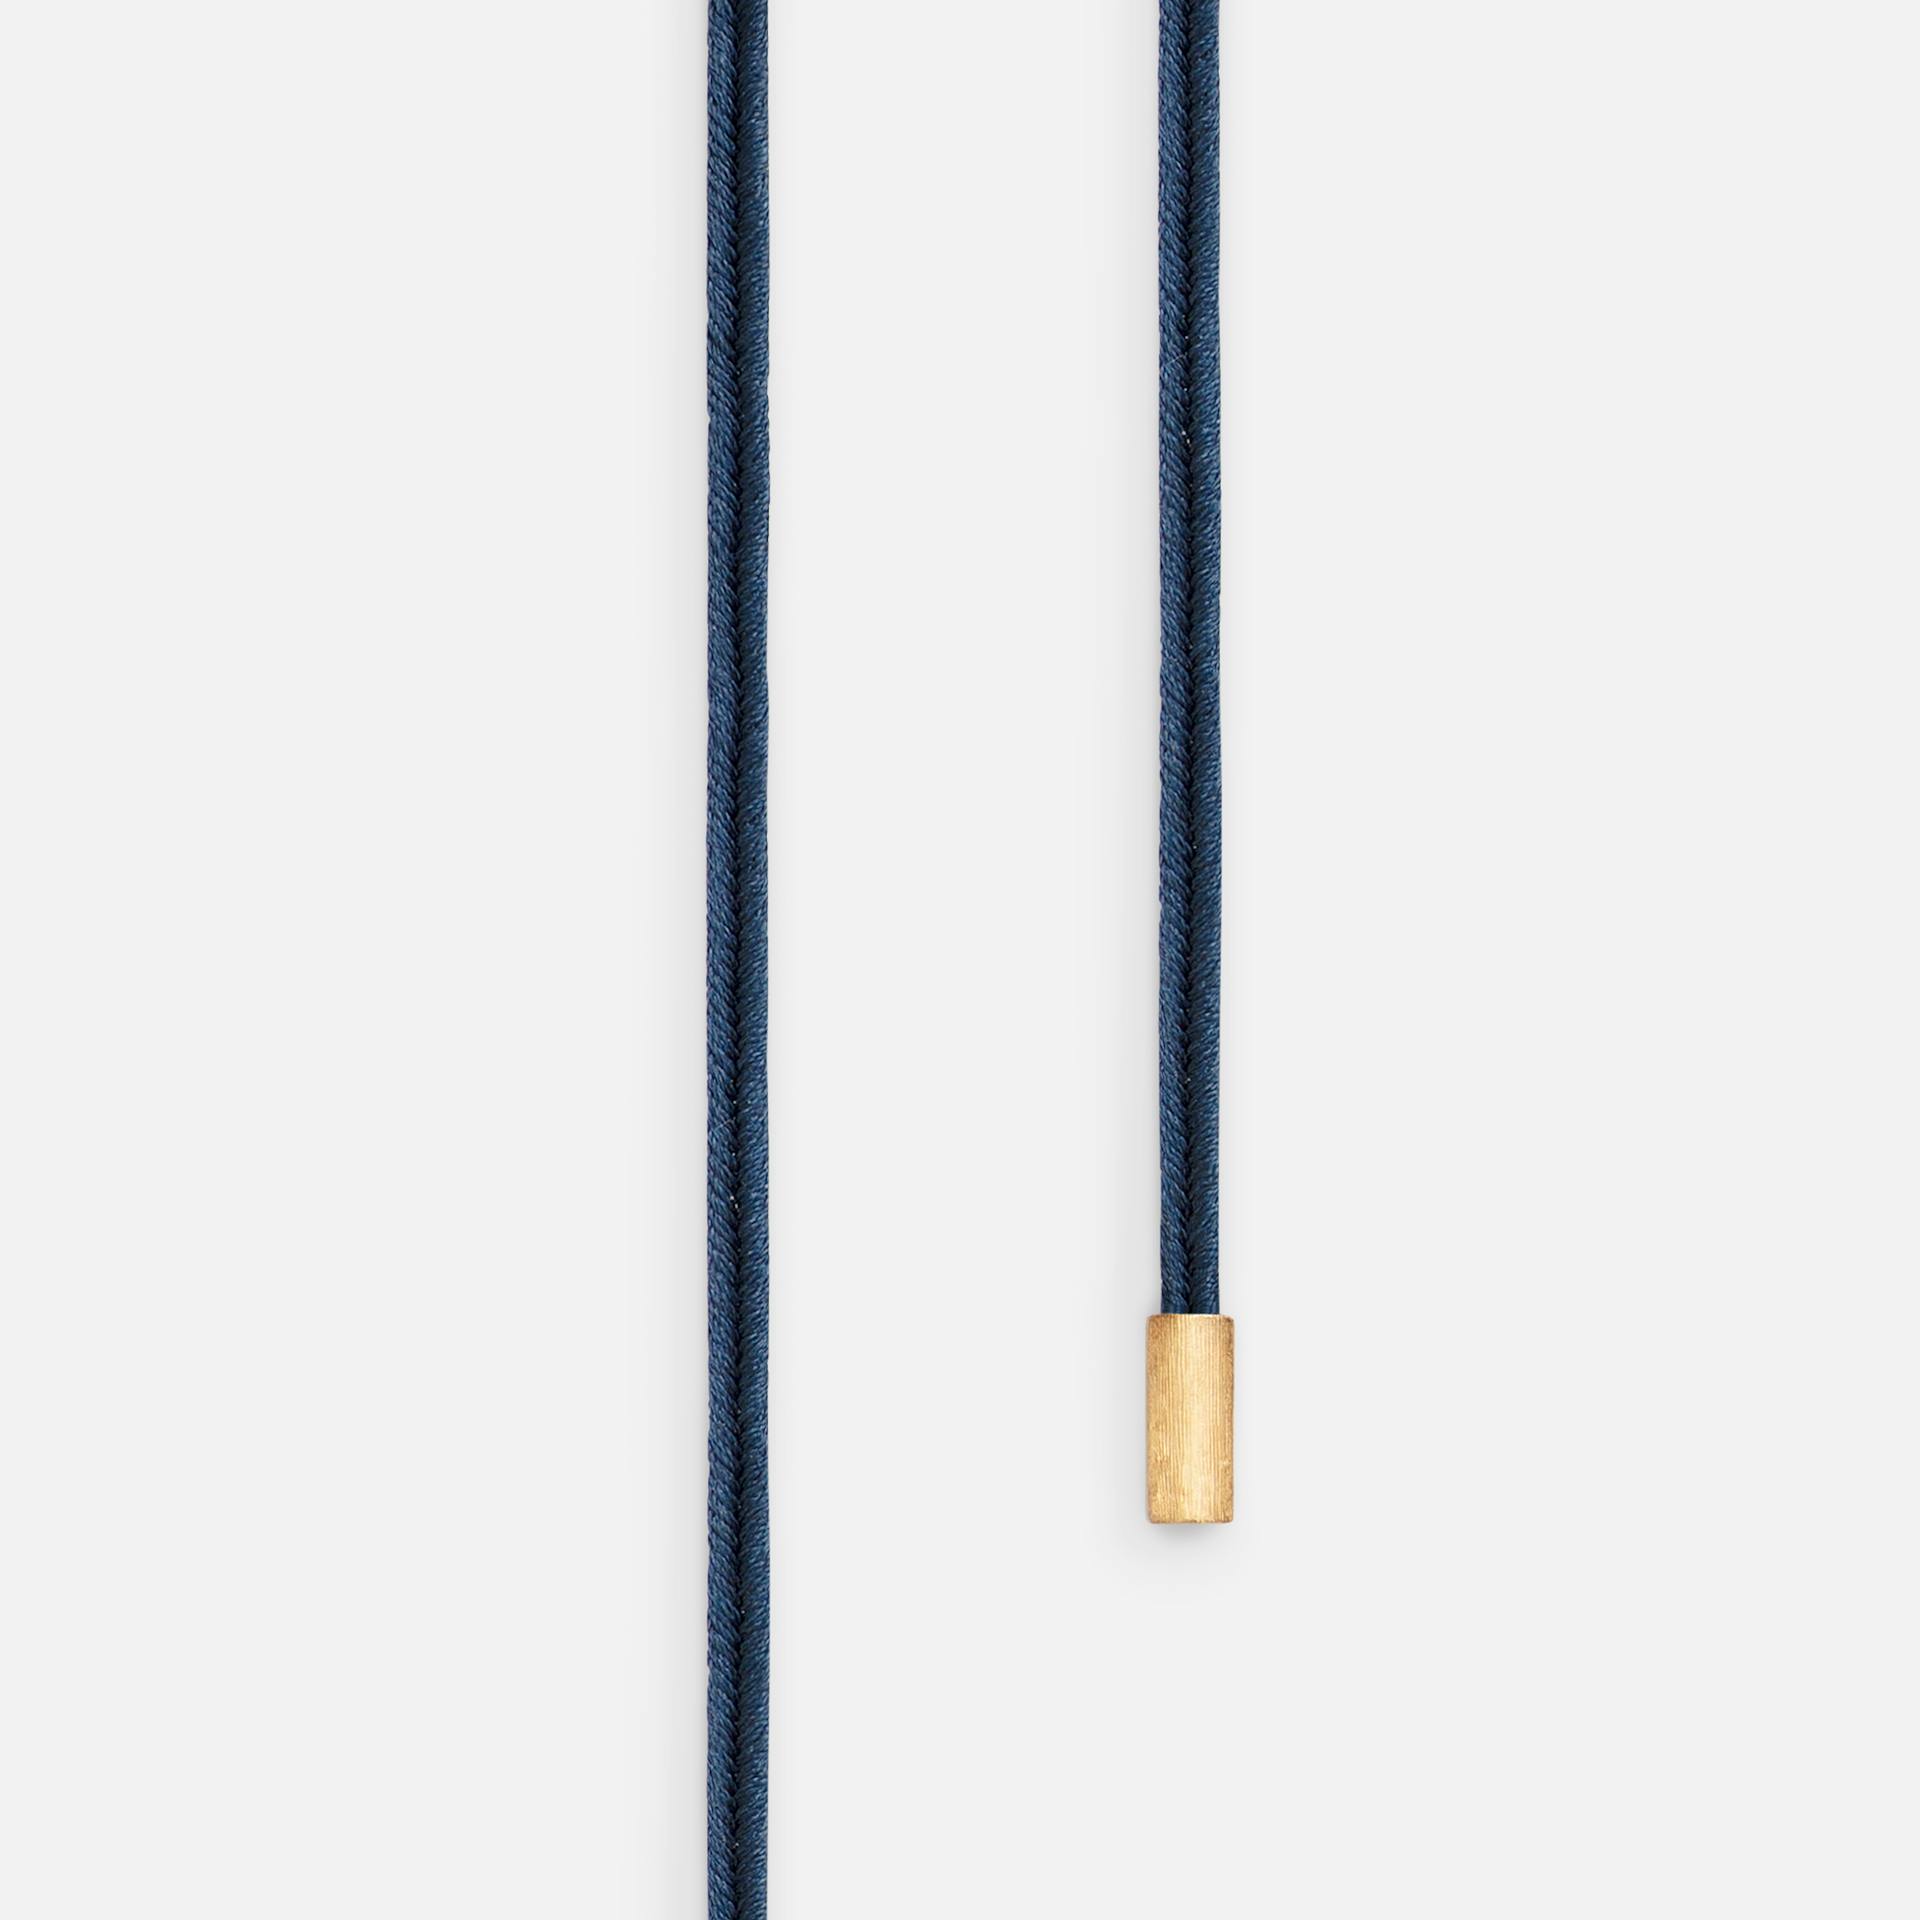 Silk String Necklace with 18 Karat Yellow Gold End Pieces  |  Ole Lynggaard Copenhagen   